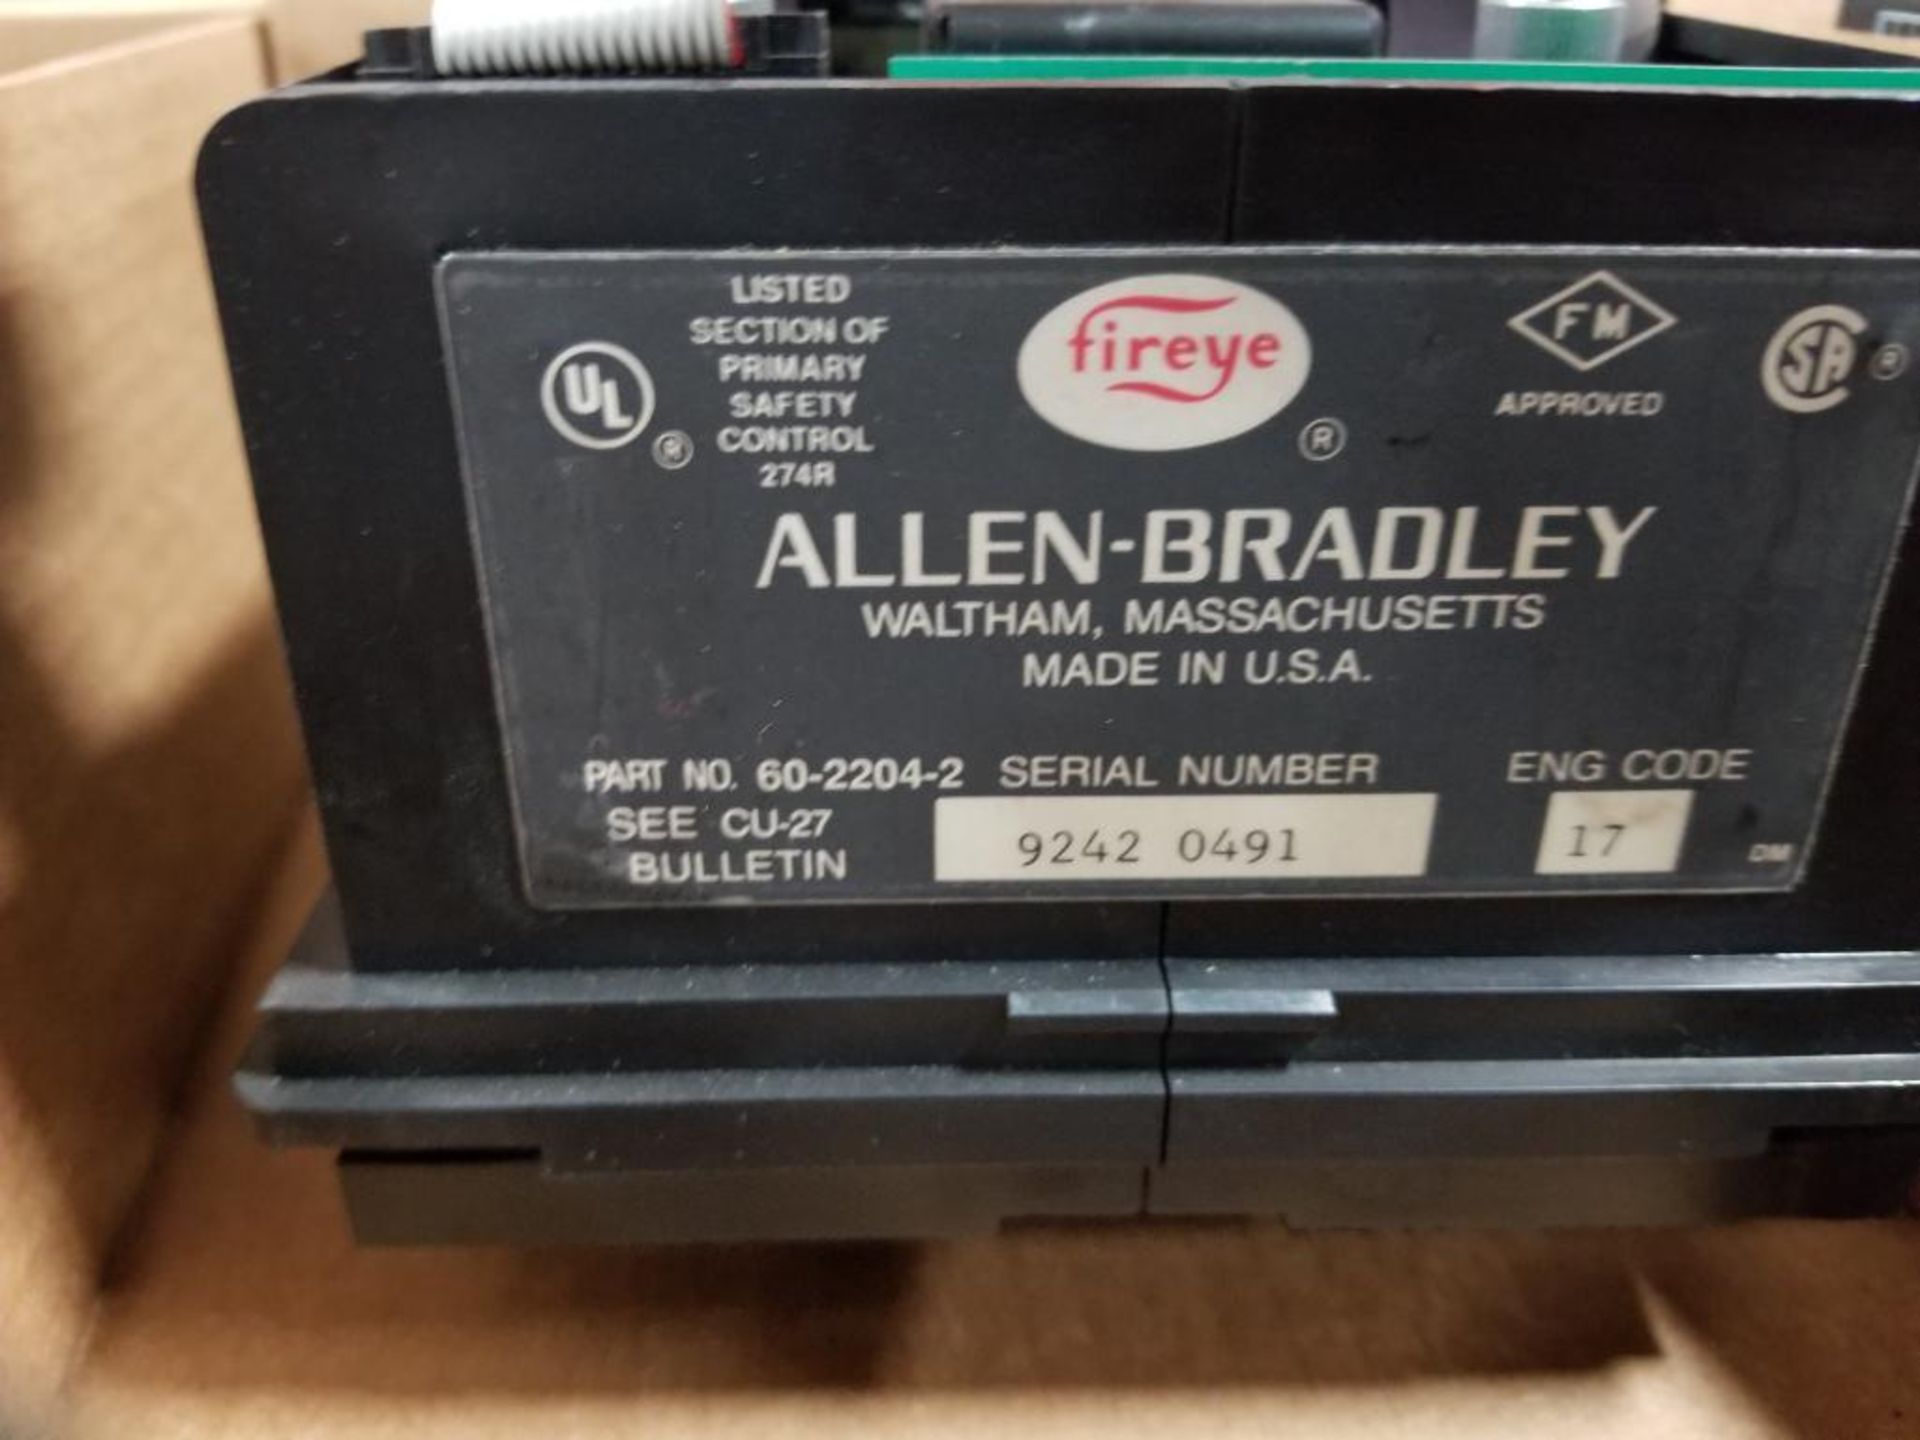 Allen Bradley Fireye 60-2204-2 burner control. - Image 2 of 3